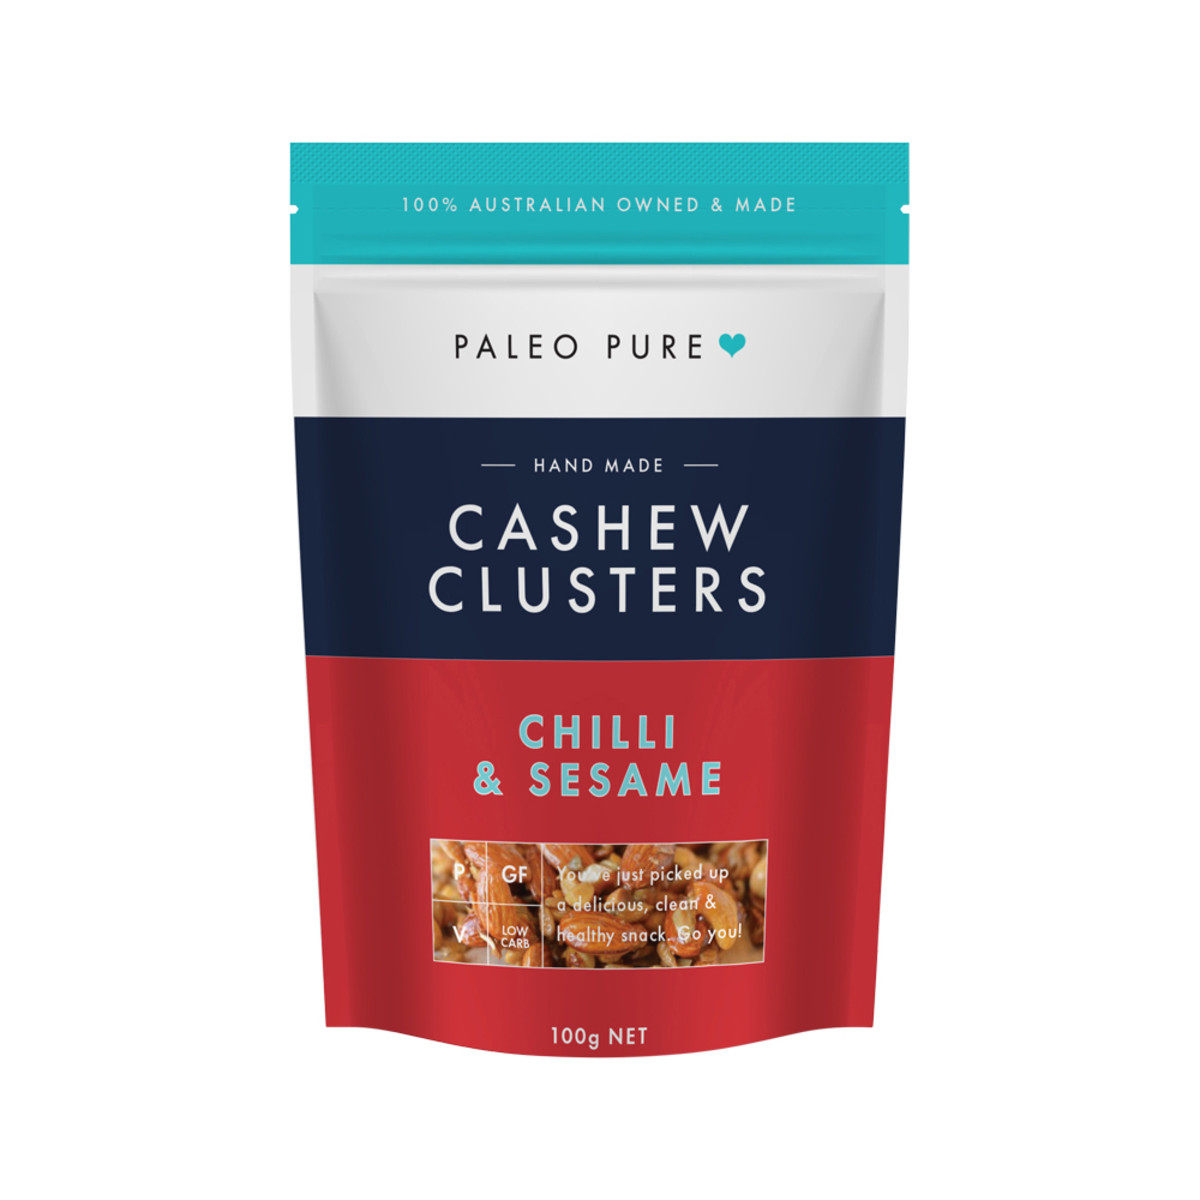 PALEO PURE - Cashew Clusters Chilli & Sesame